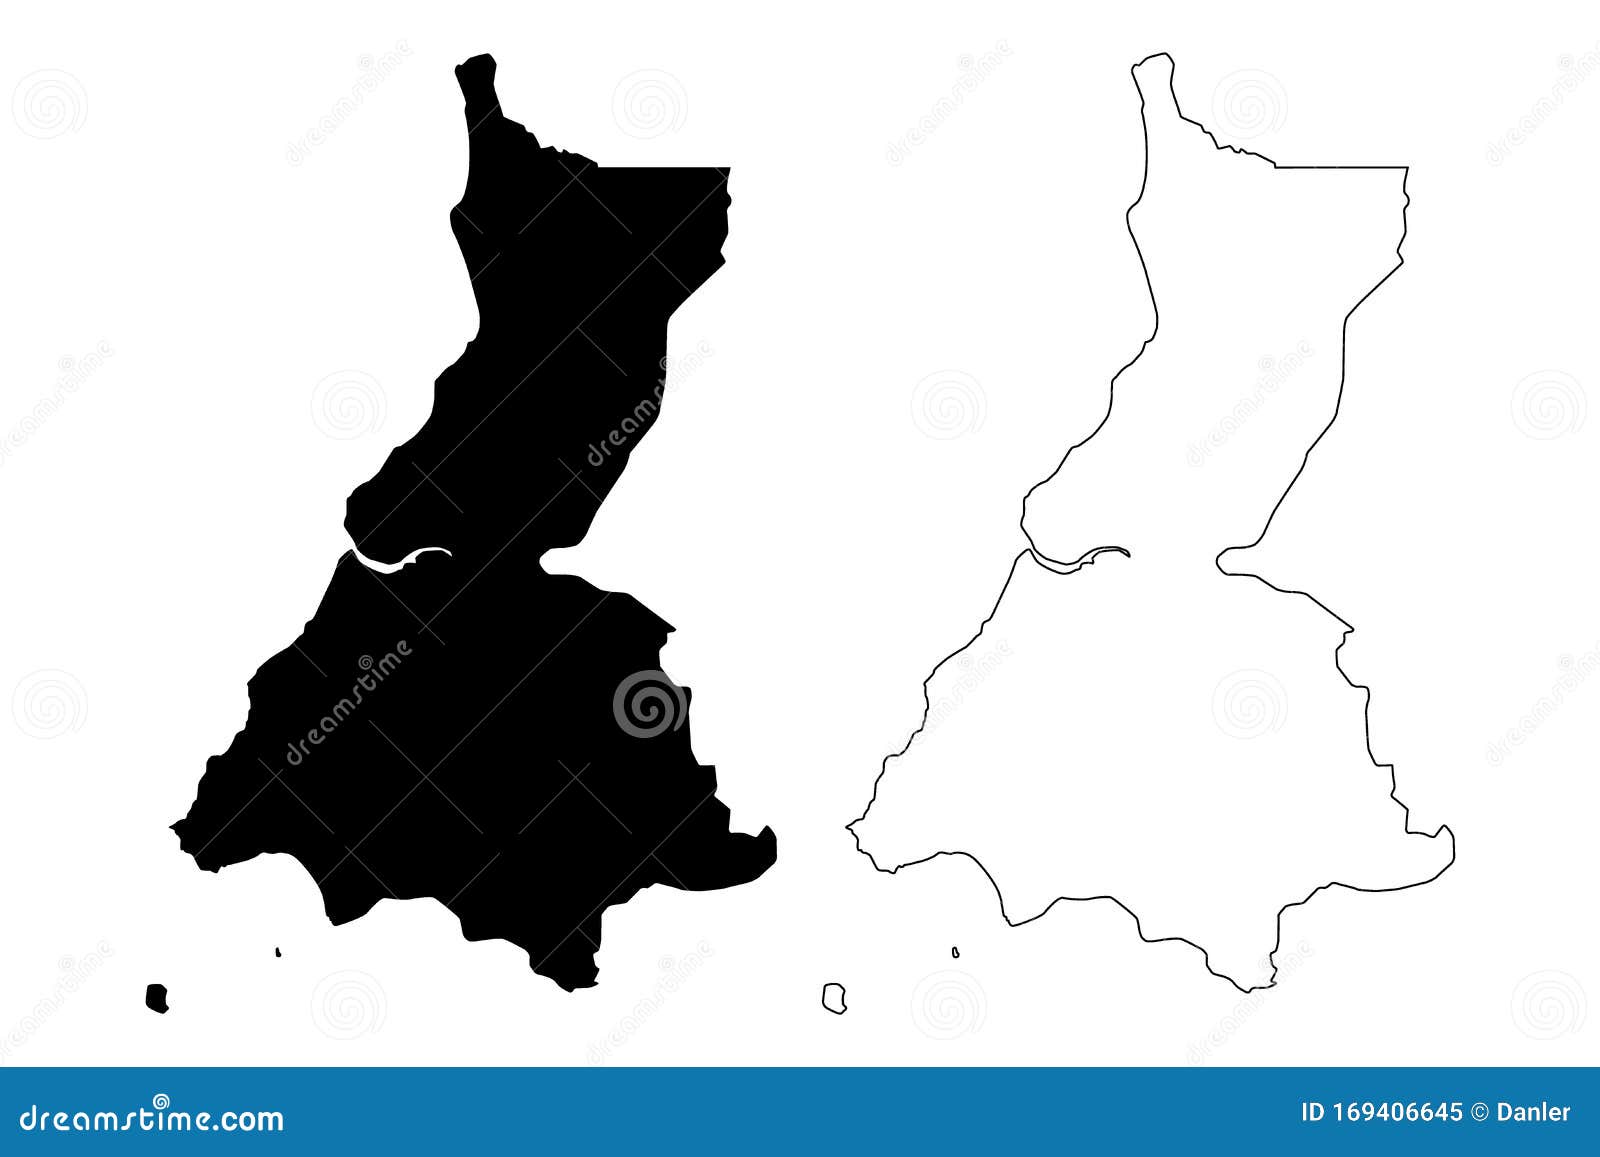 litoral republic of equatorial guinea, provinces of equatorial guinea map  , scribble sketch litoral province